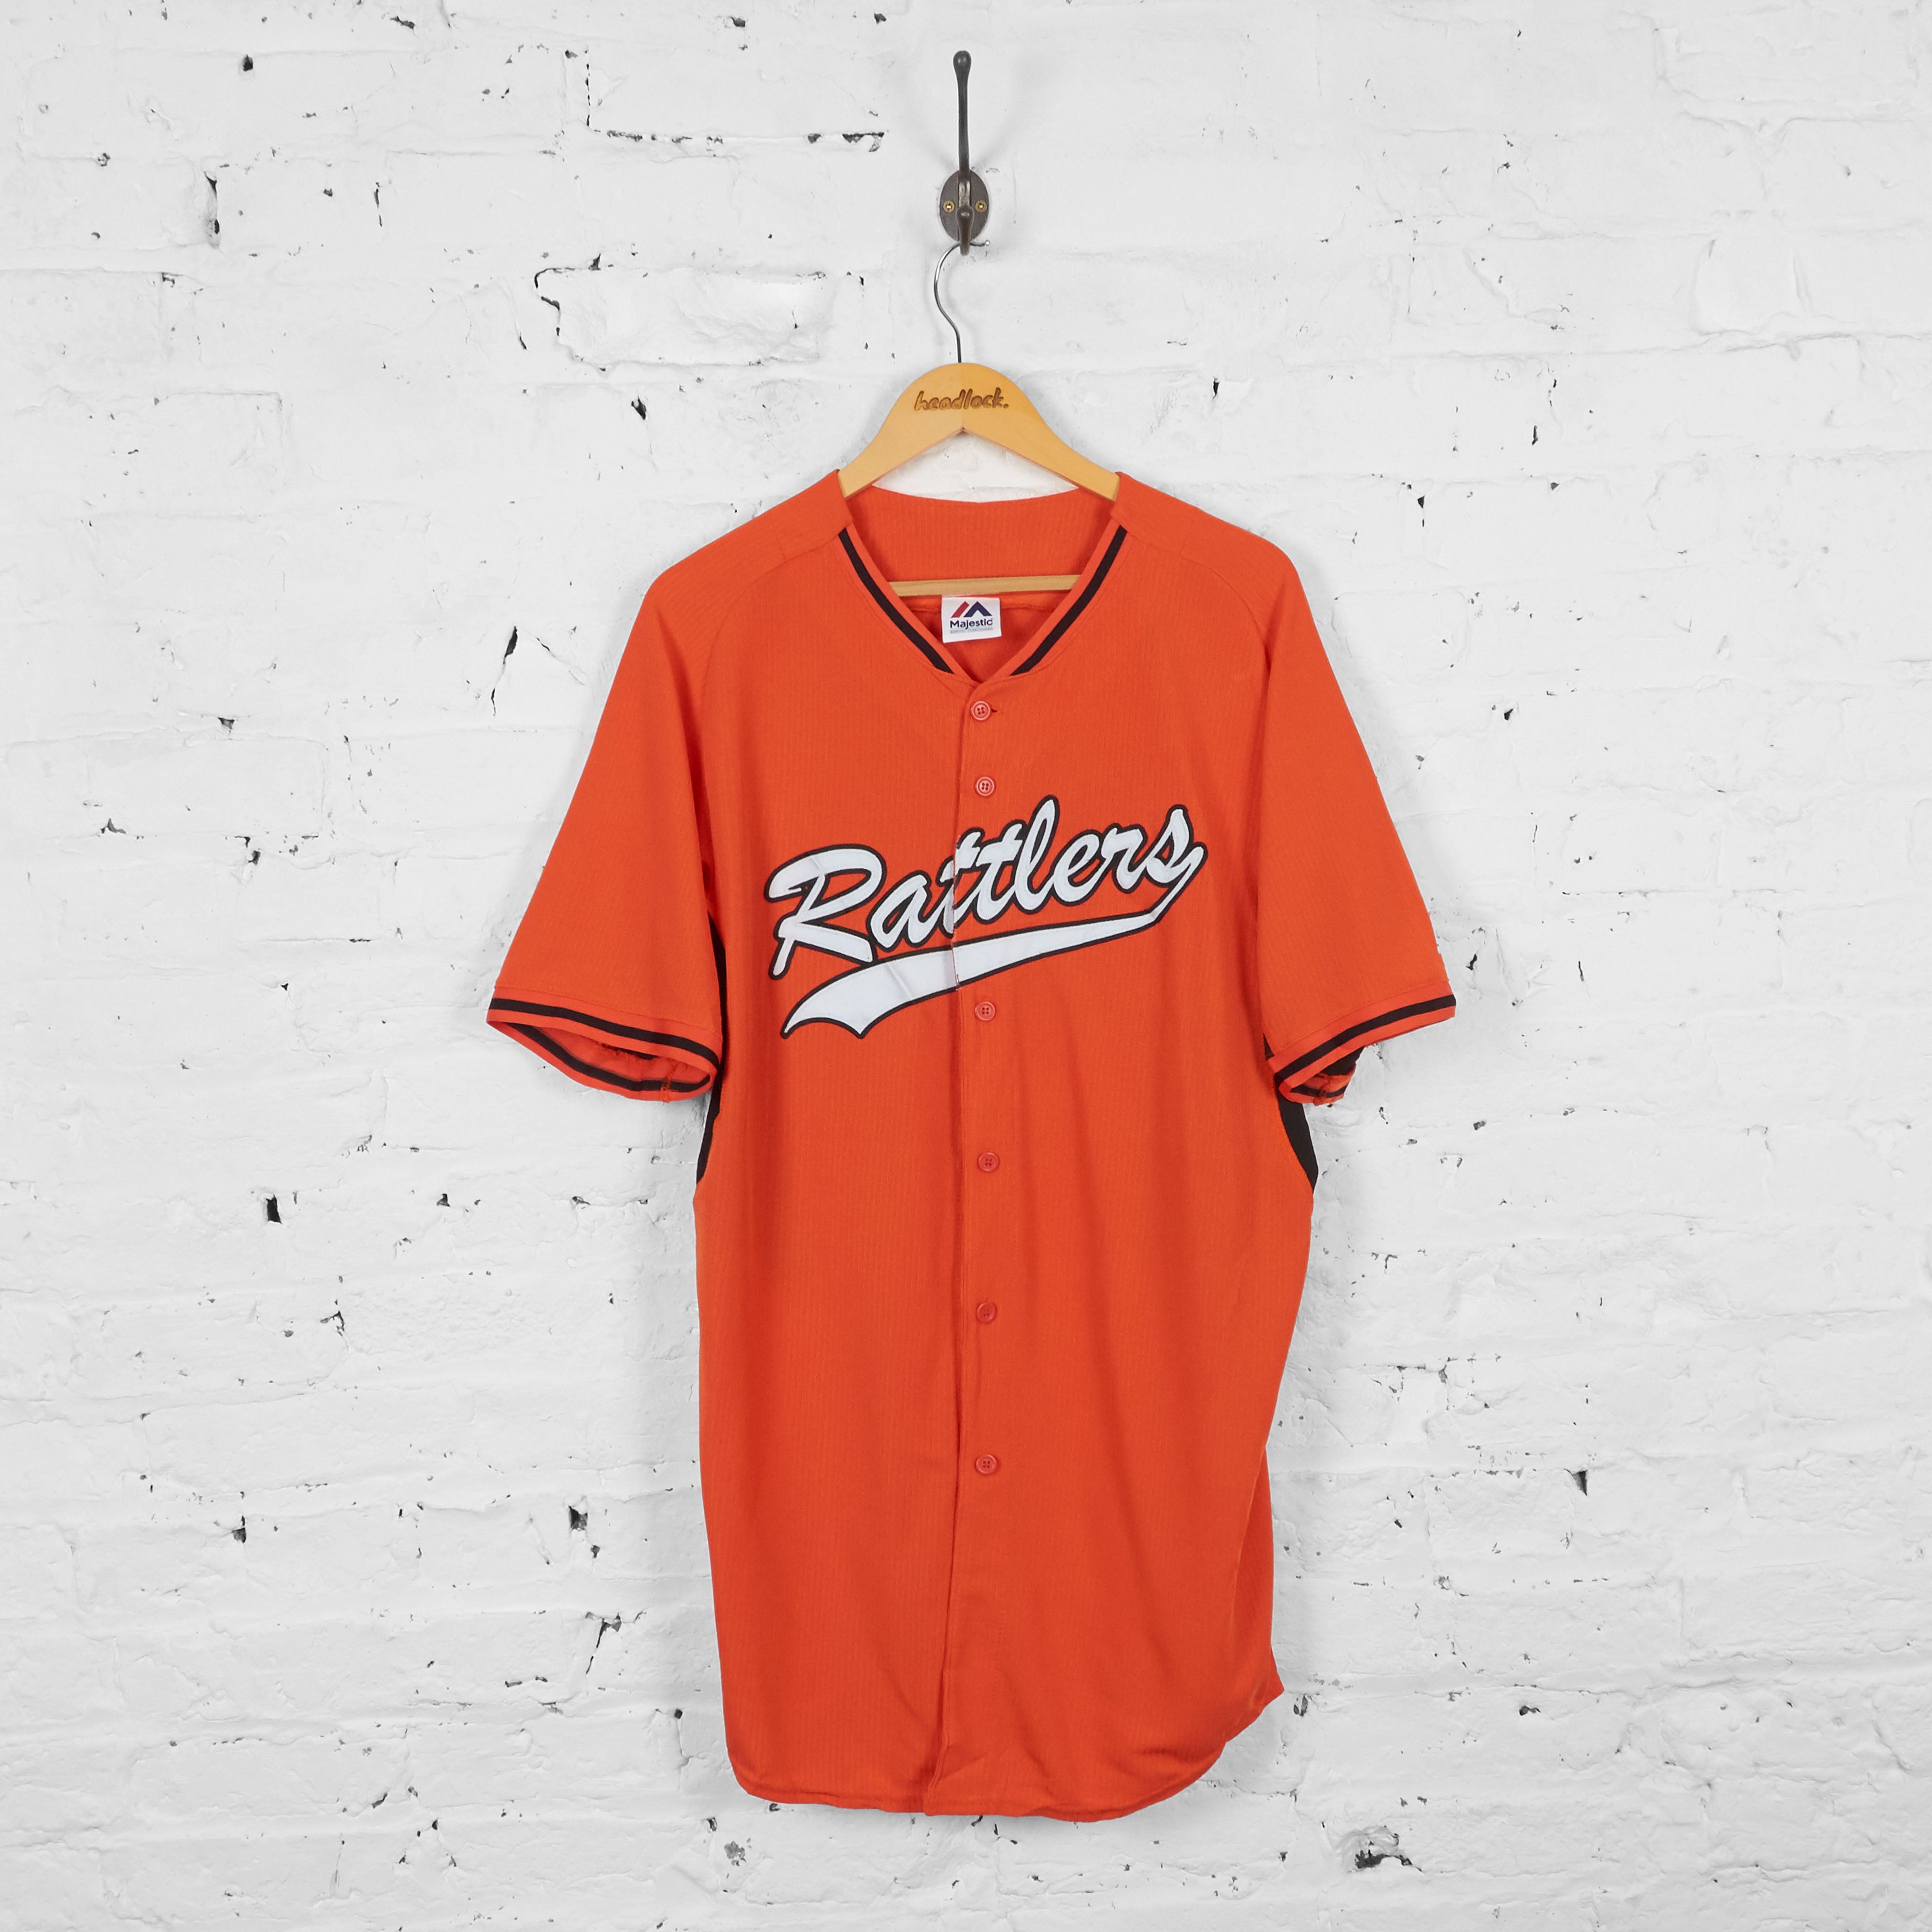 Vintage Orioles MLB Jersey 